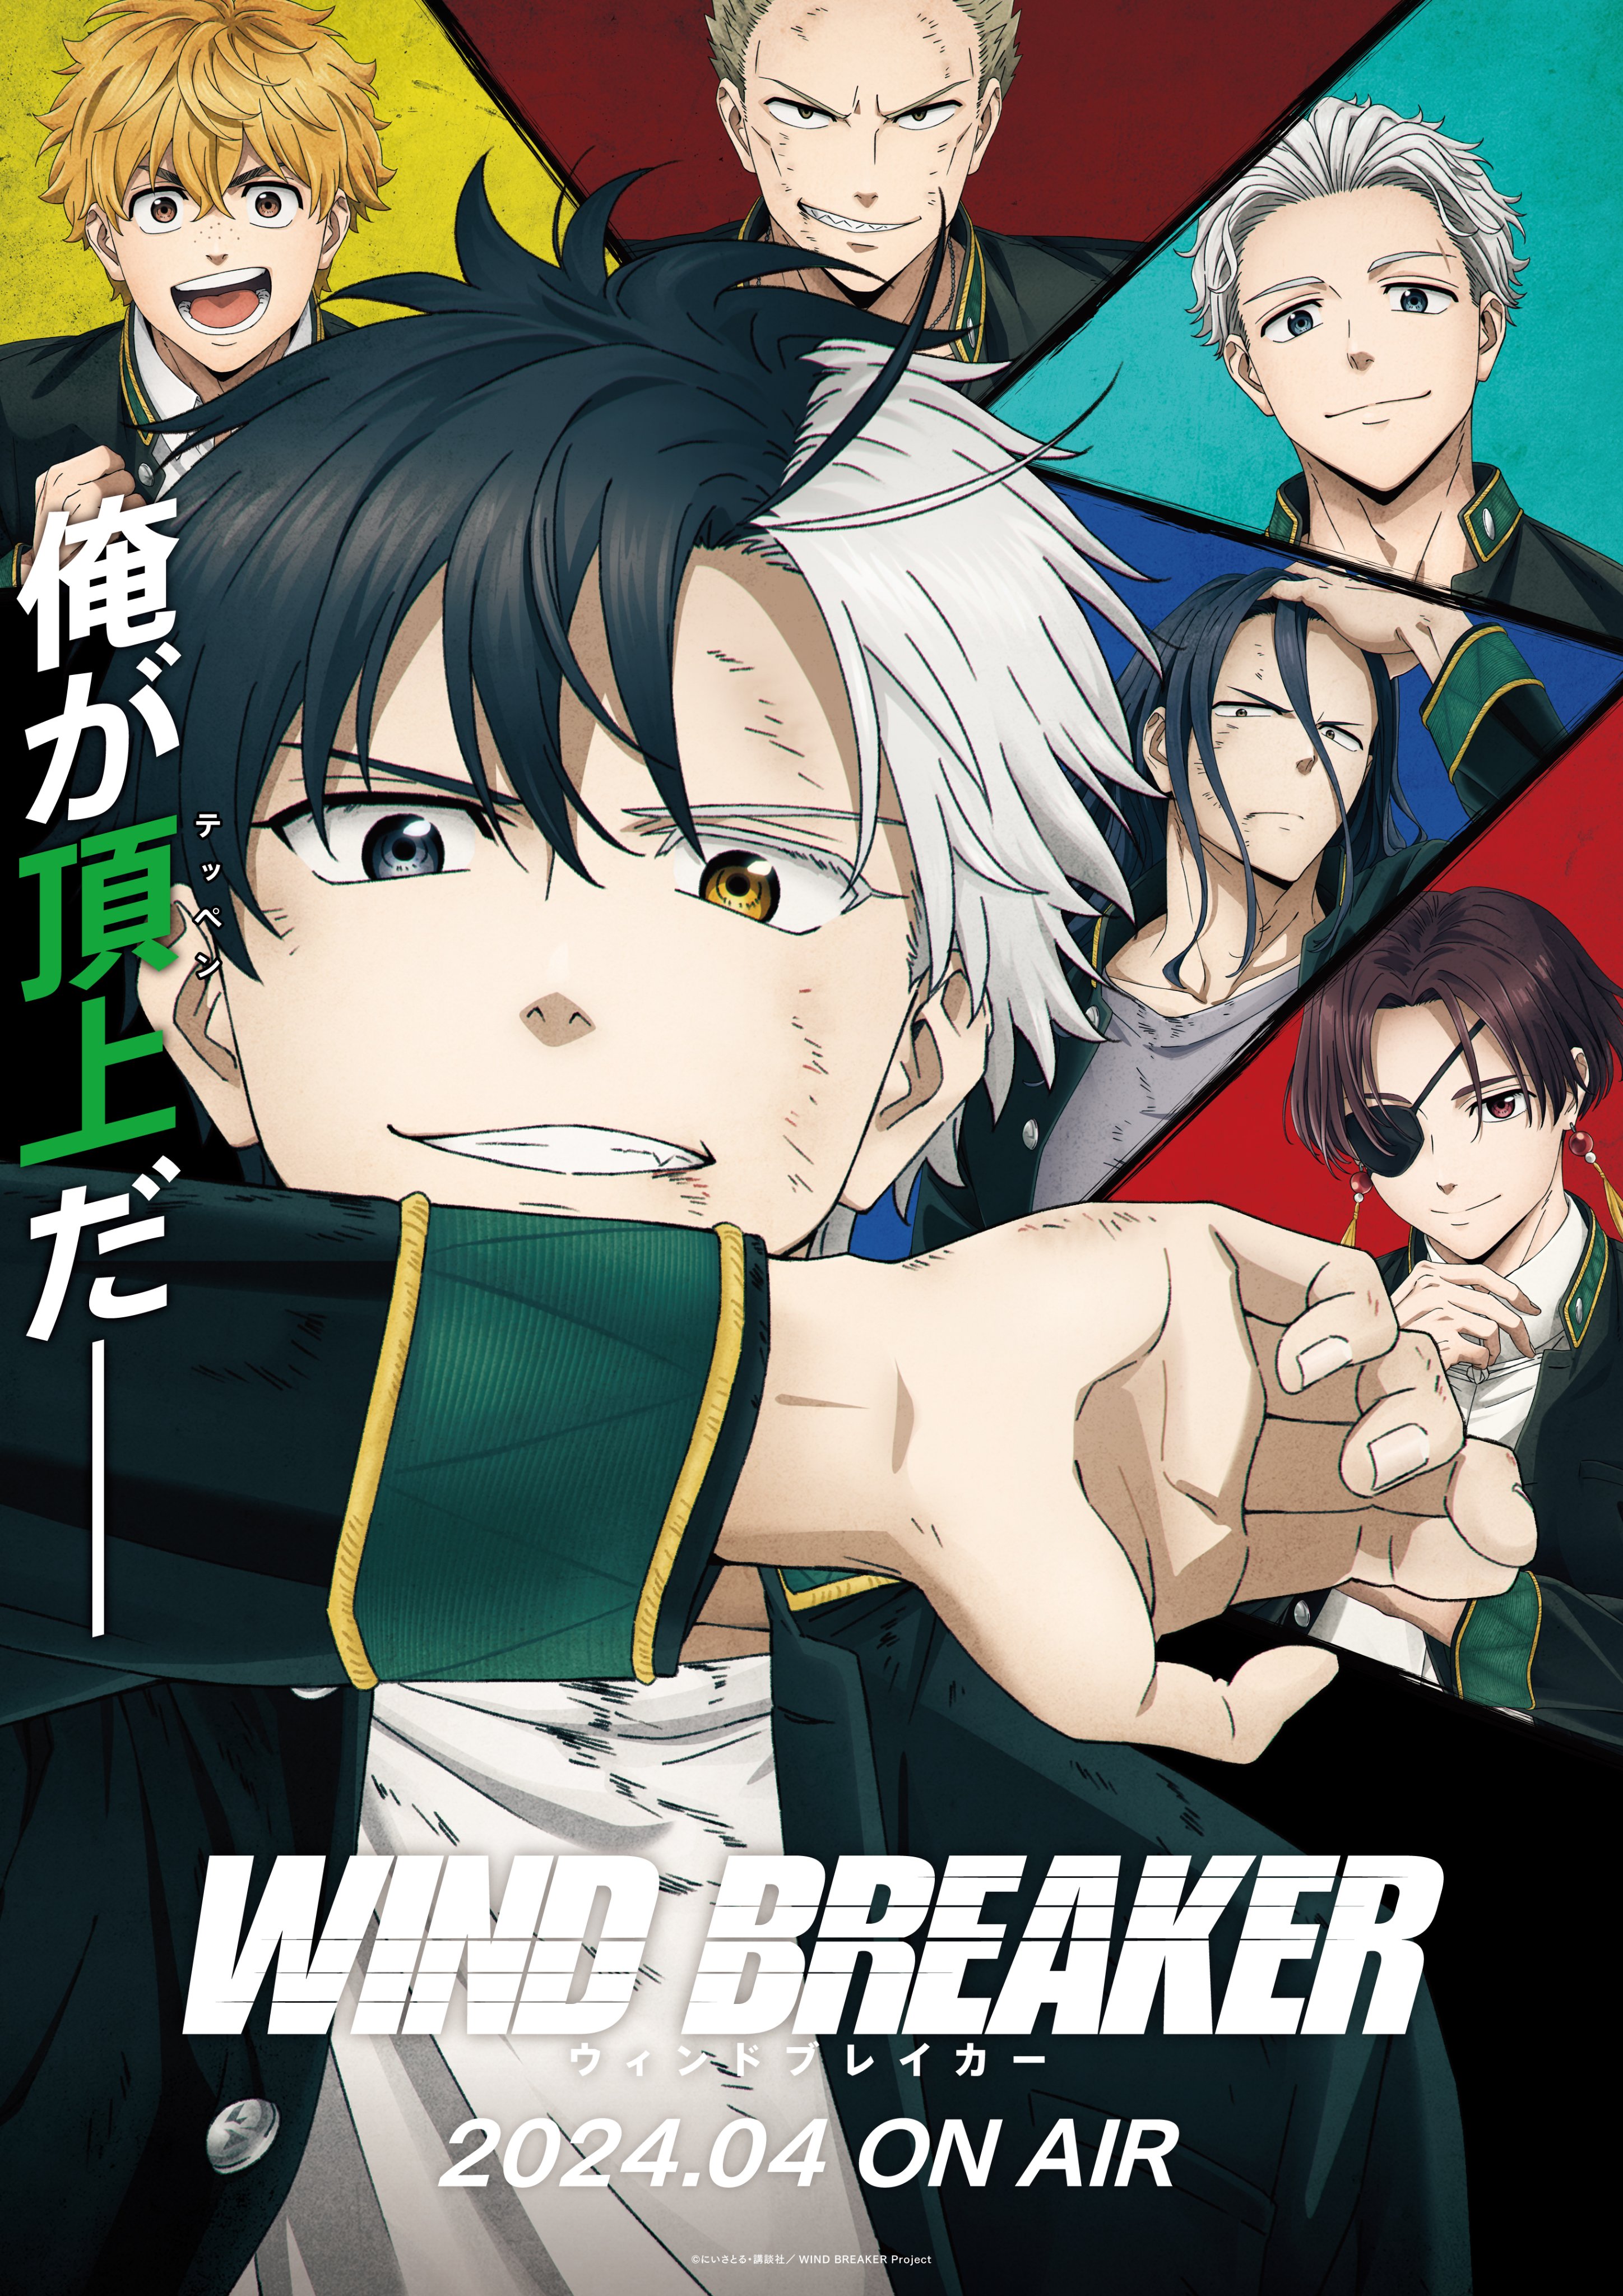 insert image of wind breaker anime release date new key visual